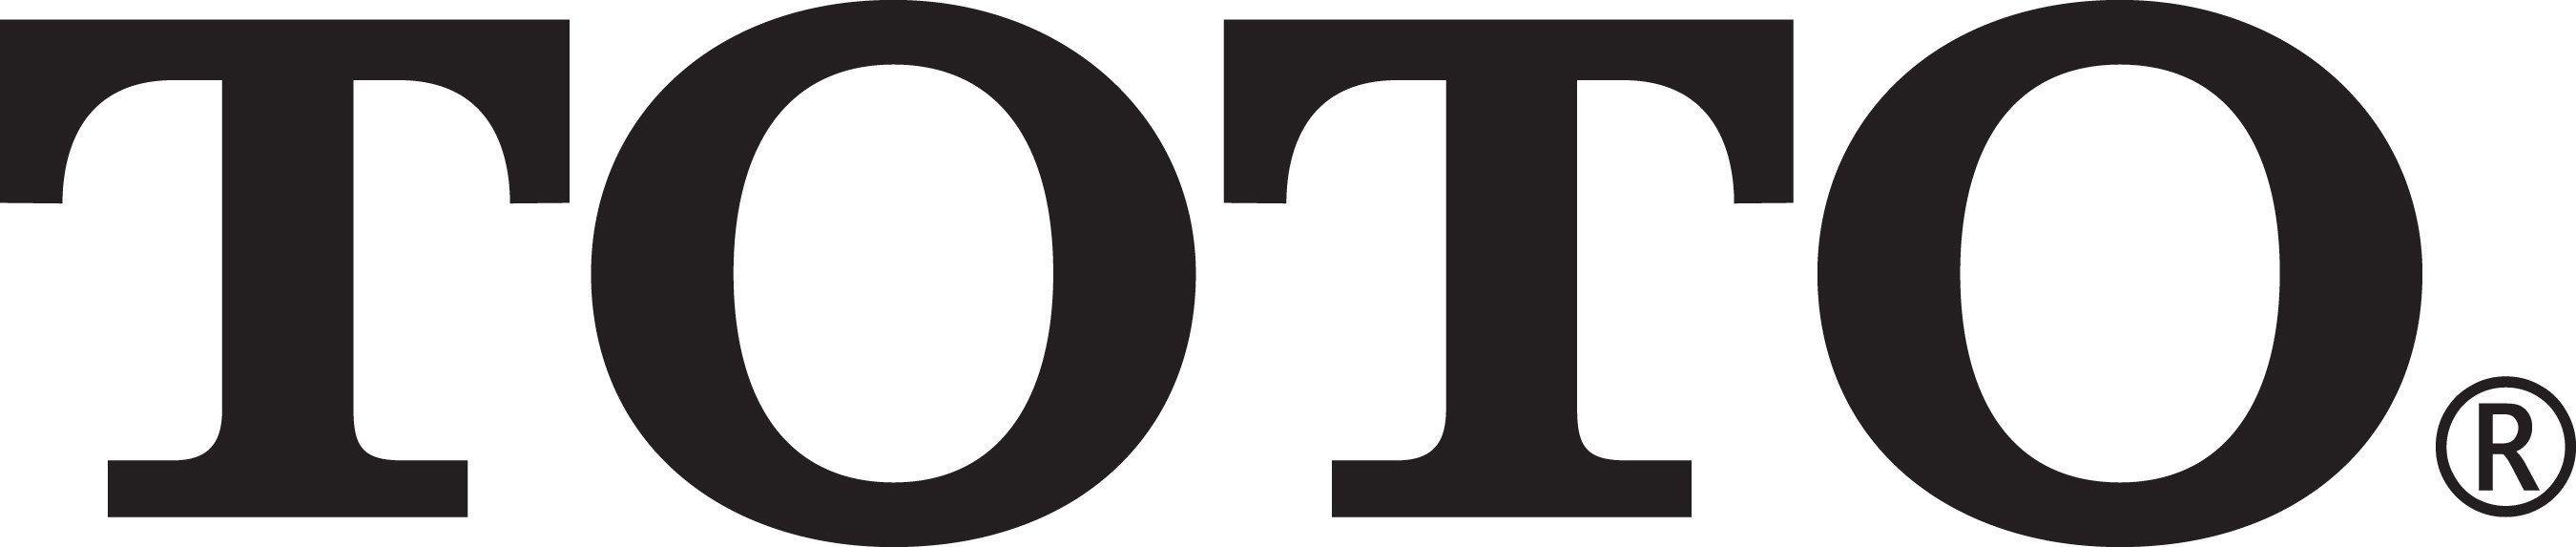 Toto Logo - TOTO THE REAL LOGO – Rubenstein Supply Company